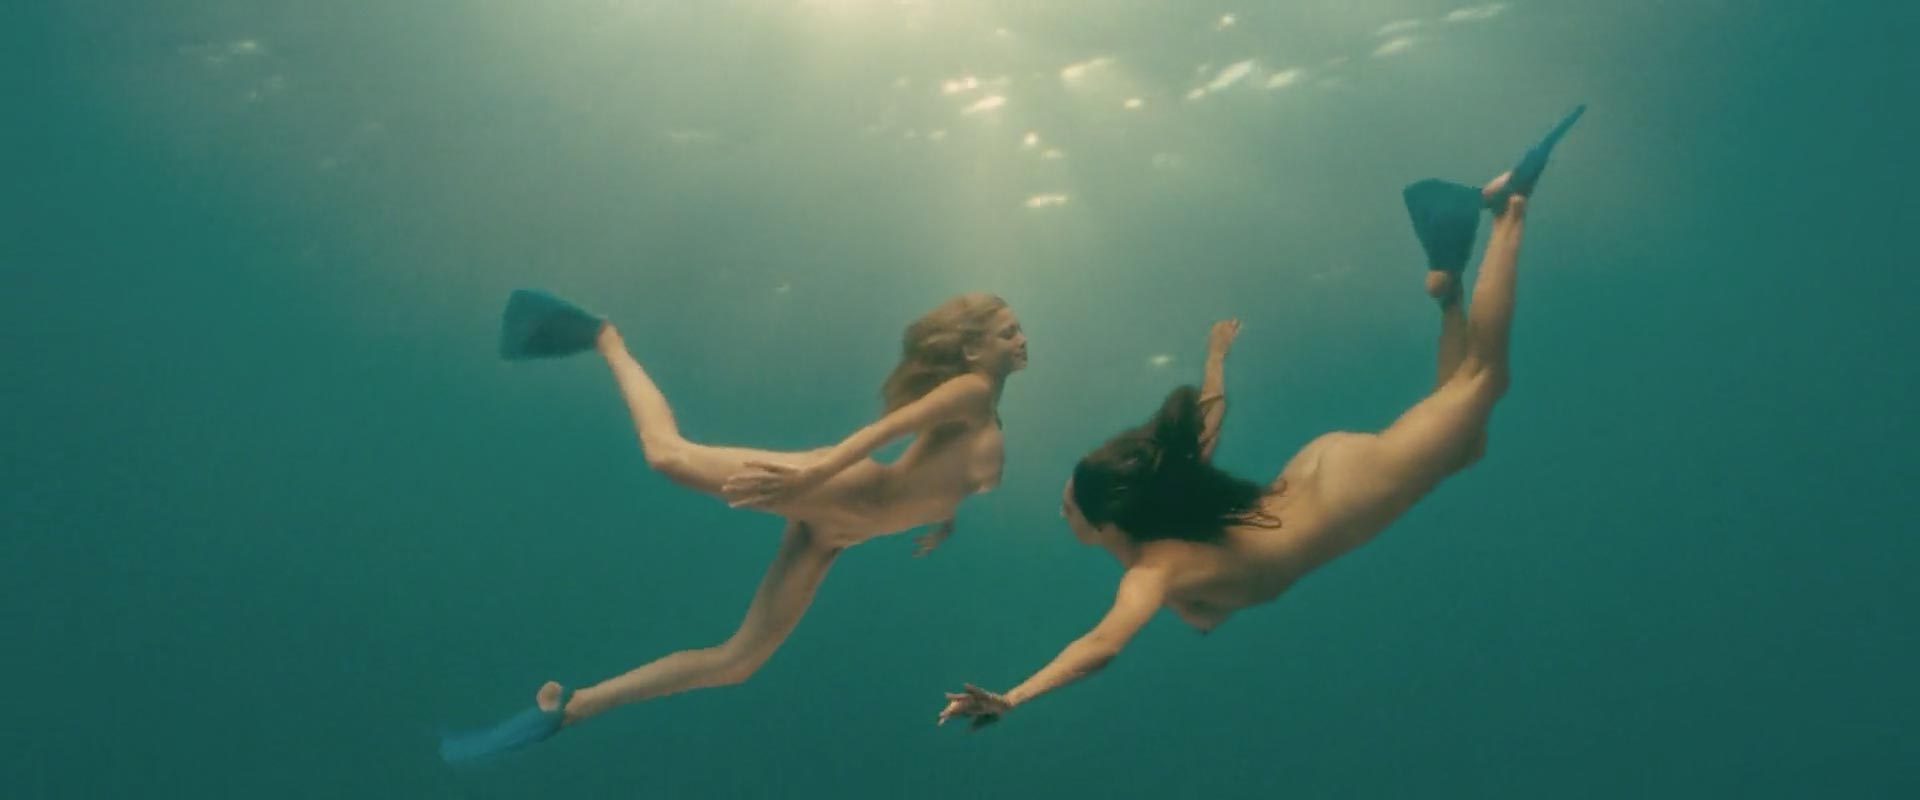 Nude swimming in Piranha 3D